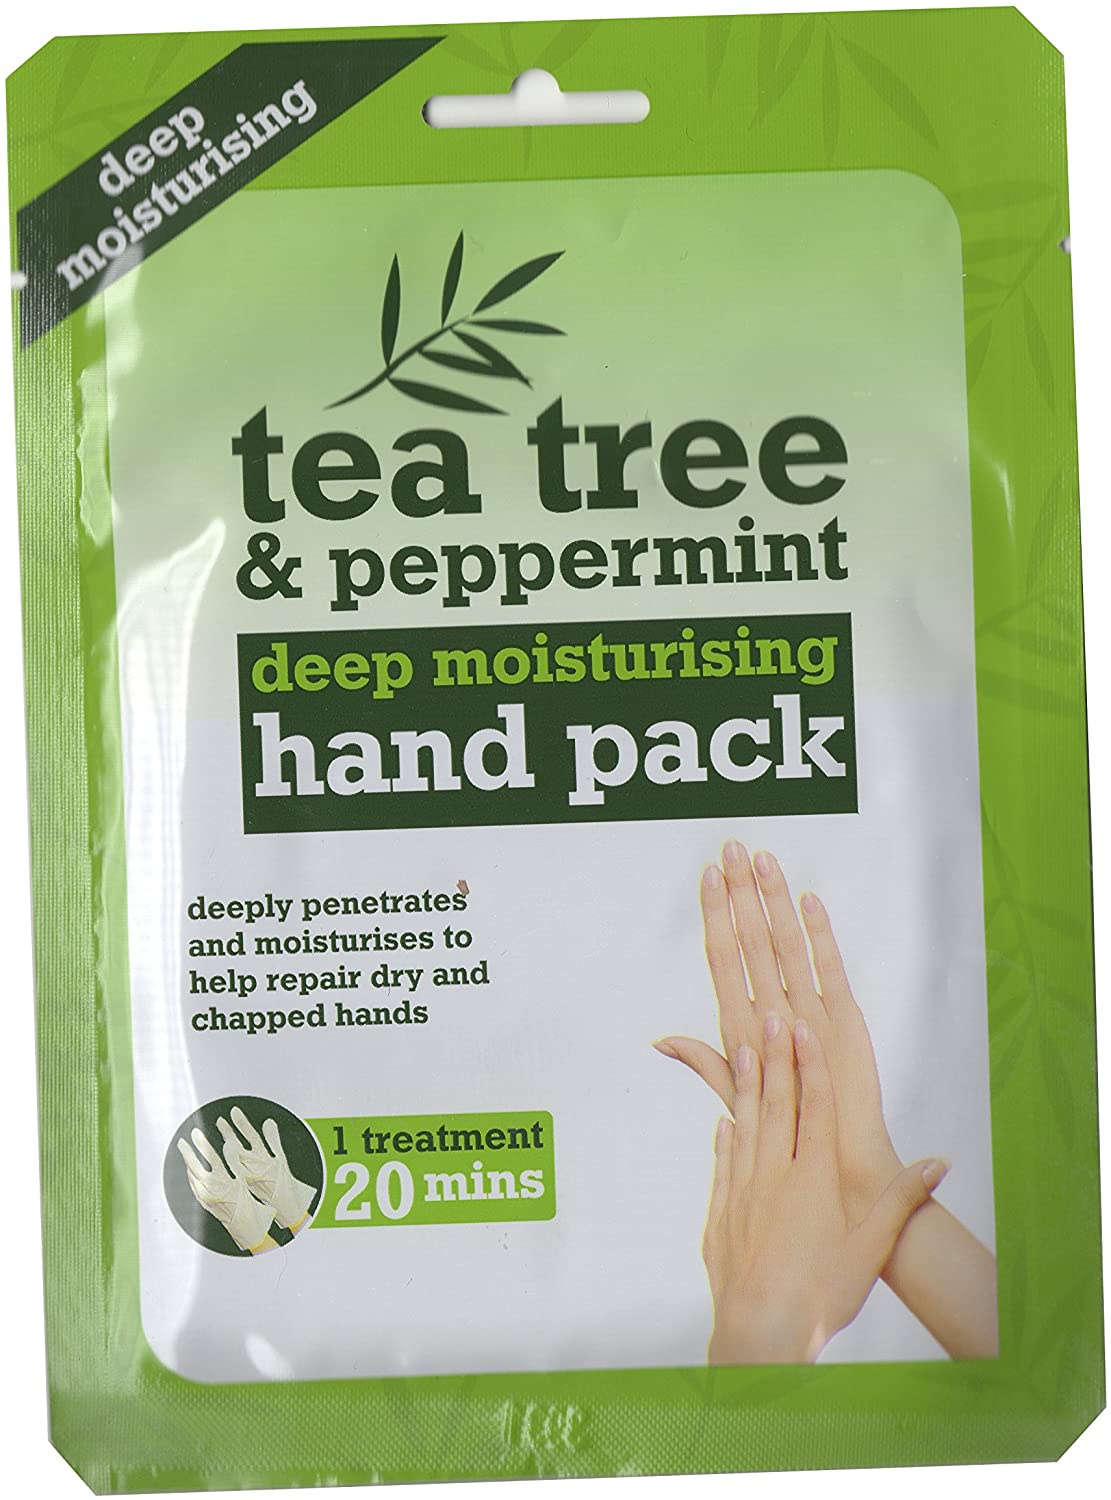 Xpel Marketing Tea Tree & Peppermint Deep Moisturising Hand Pack